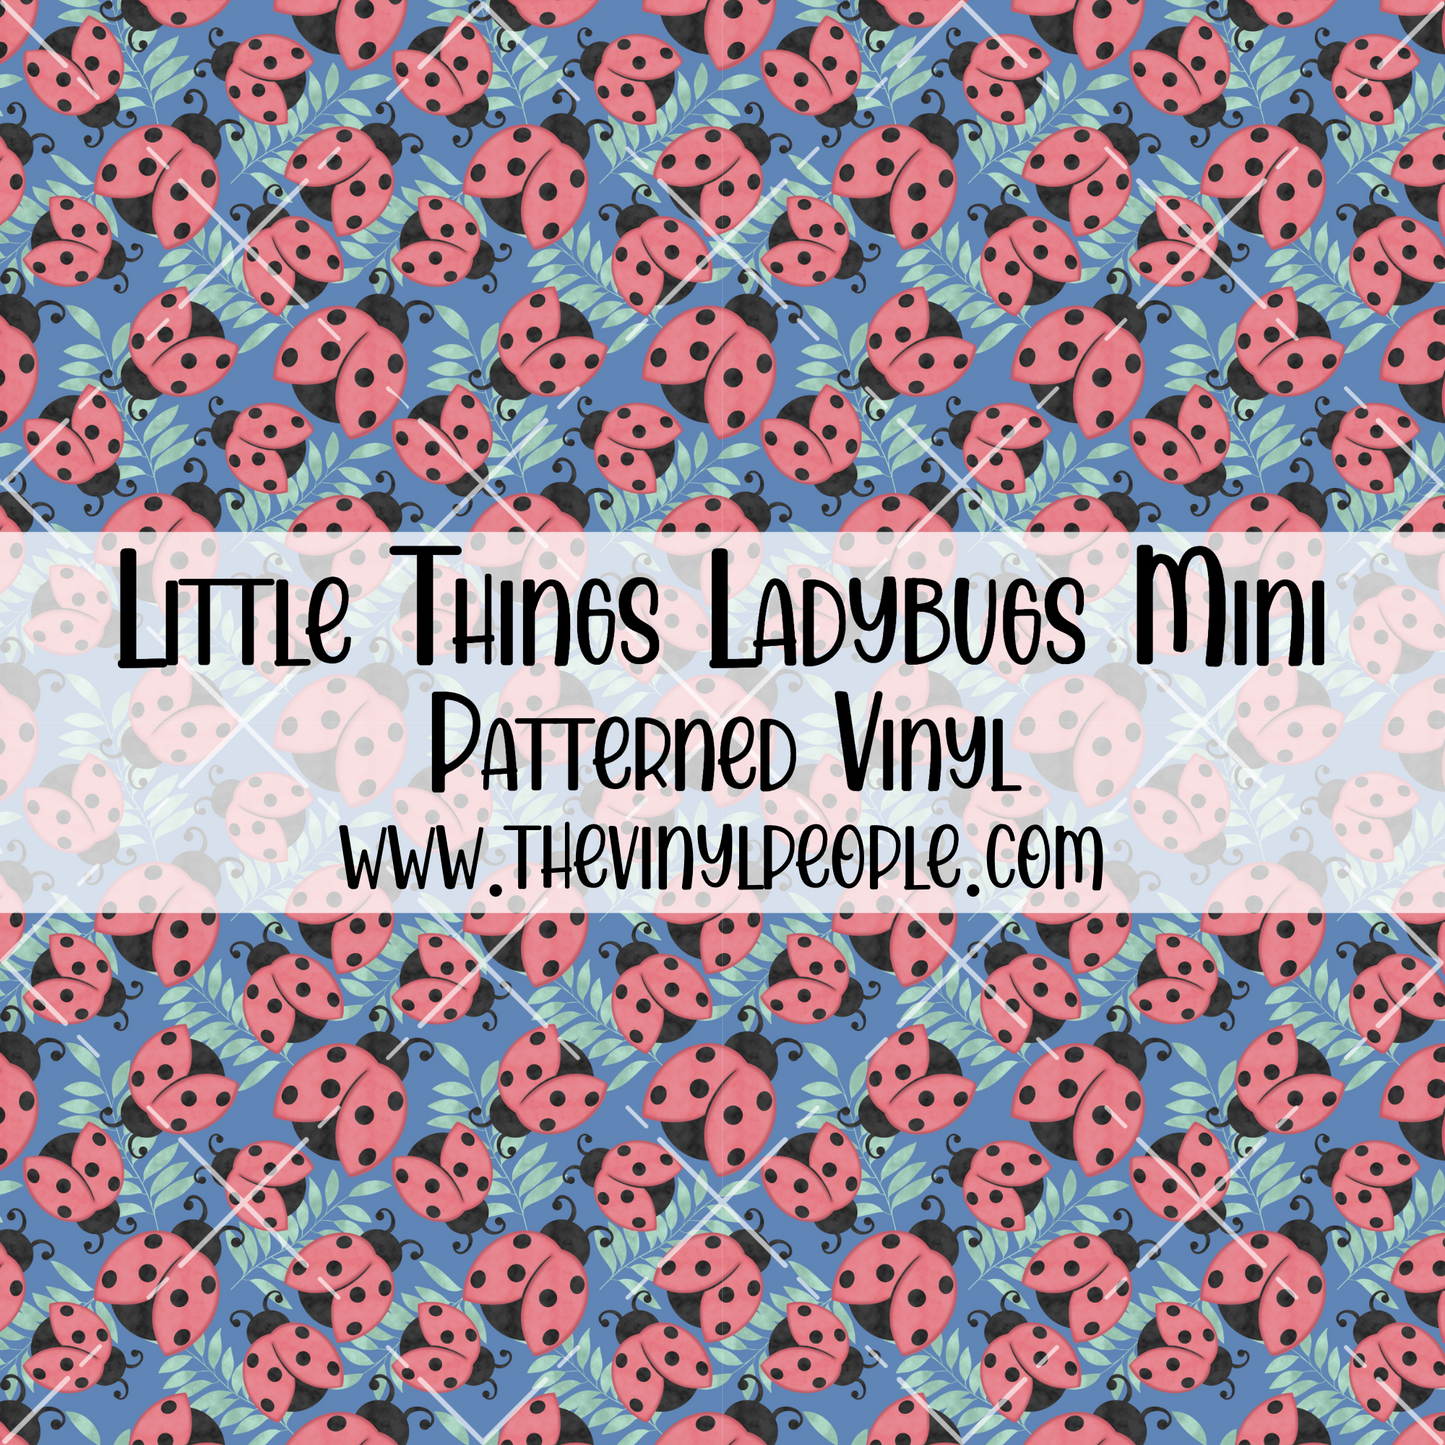 Little Things Ladybugs Patterned Vinyl